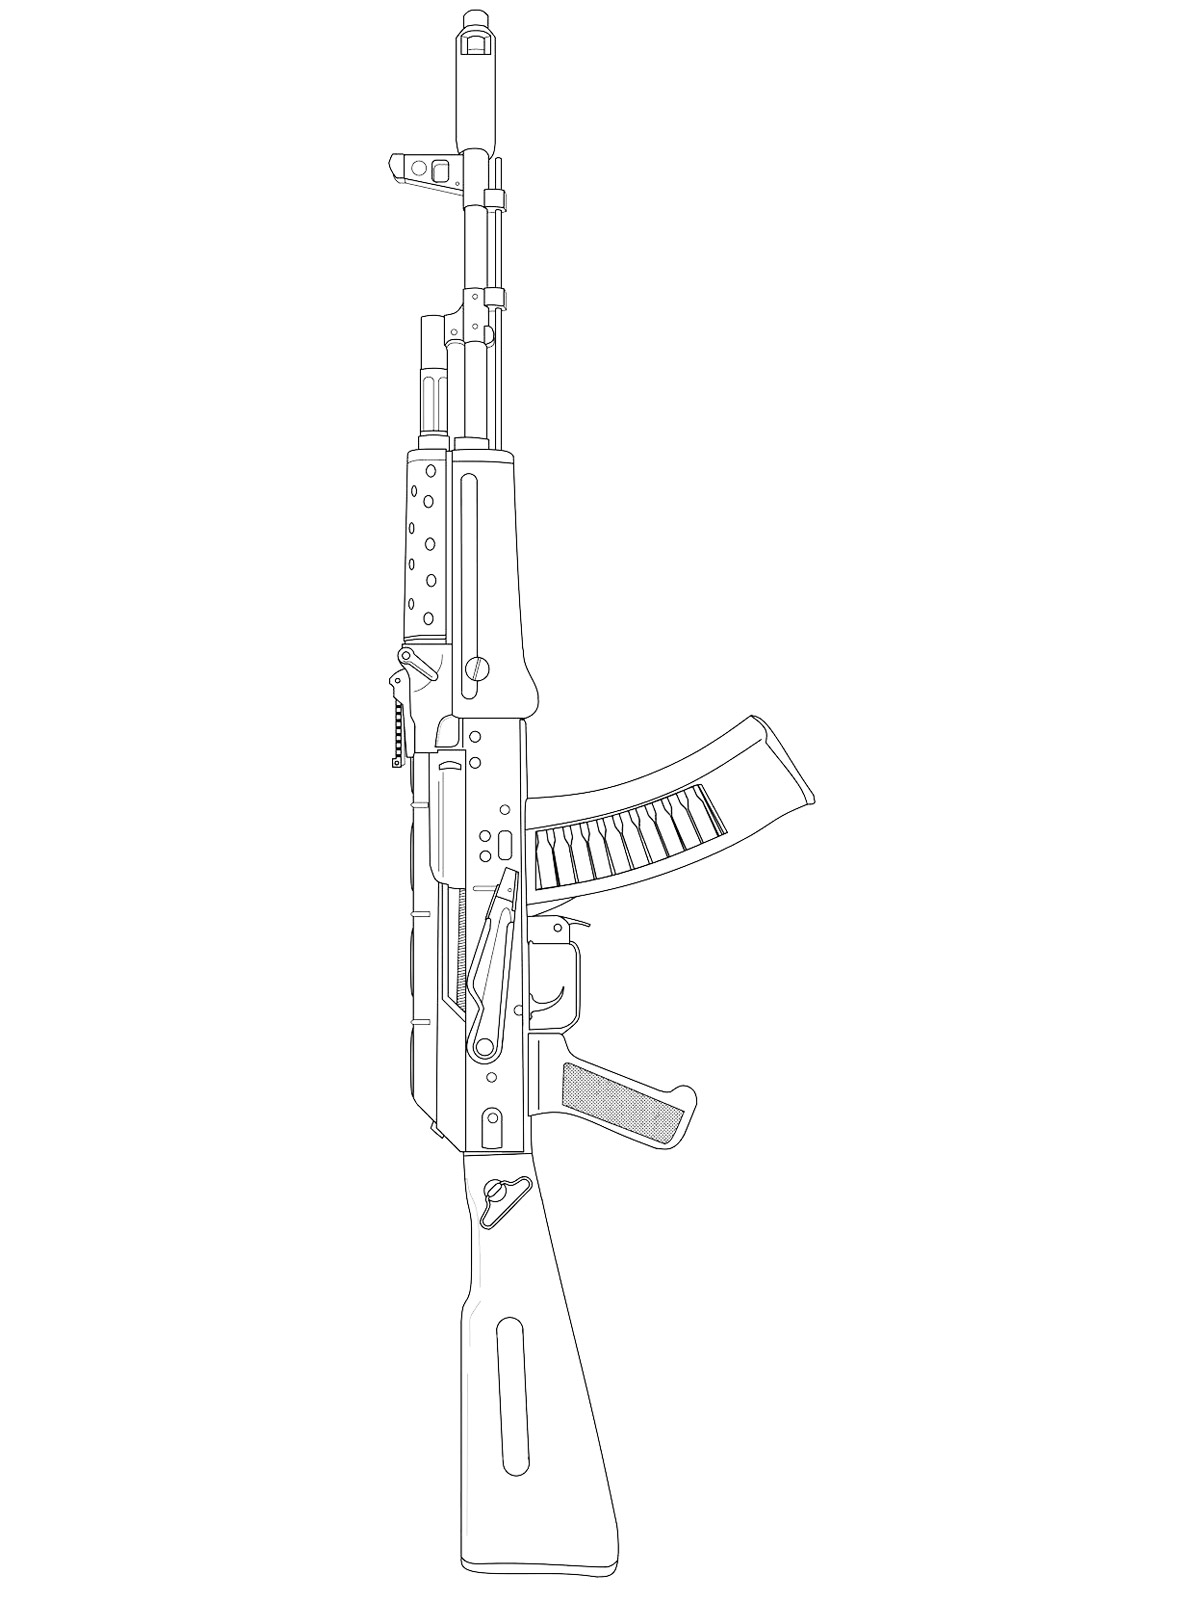 Kalashnikov assault rifle 1